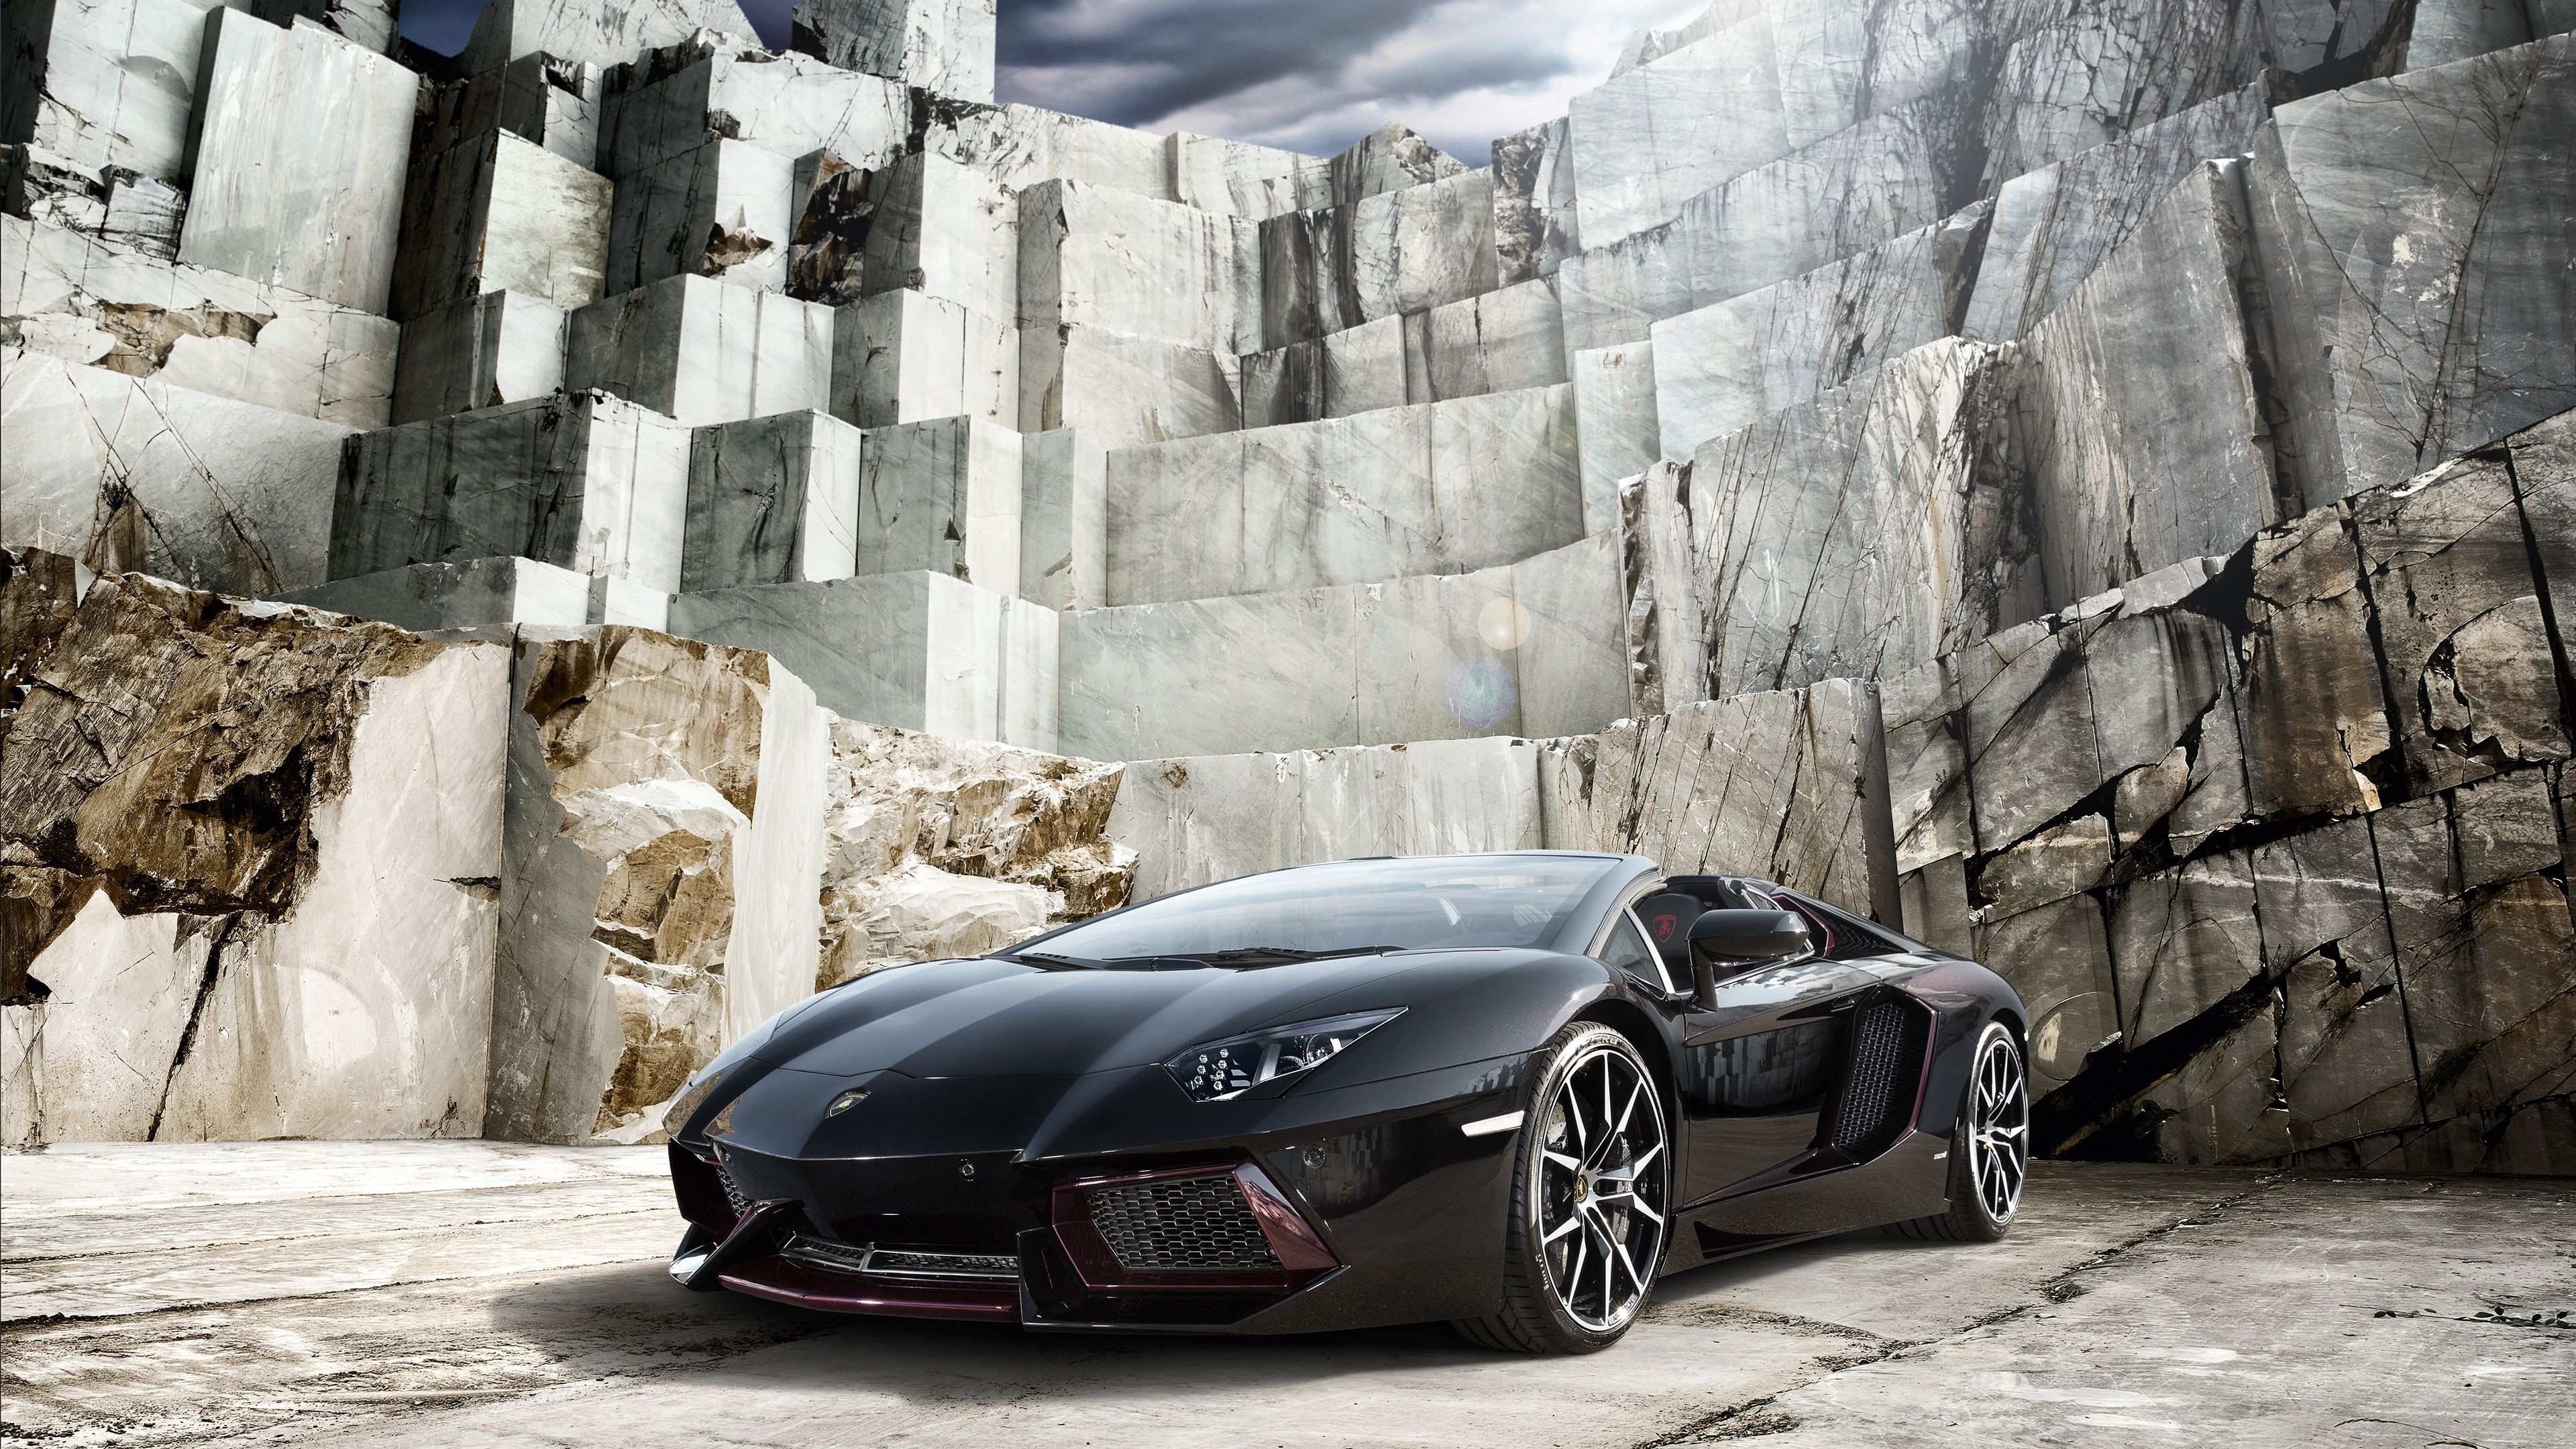 Black Lamborghini Aventador 4k, HD Cars, 4k Wallpaper, Image, Background, Photo and Picture